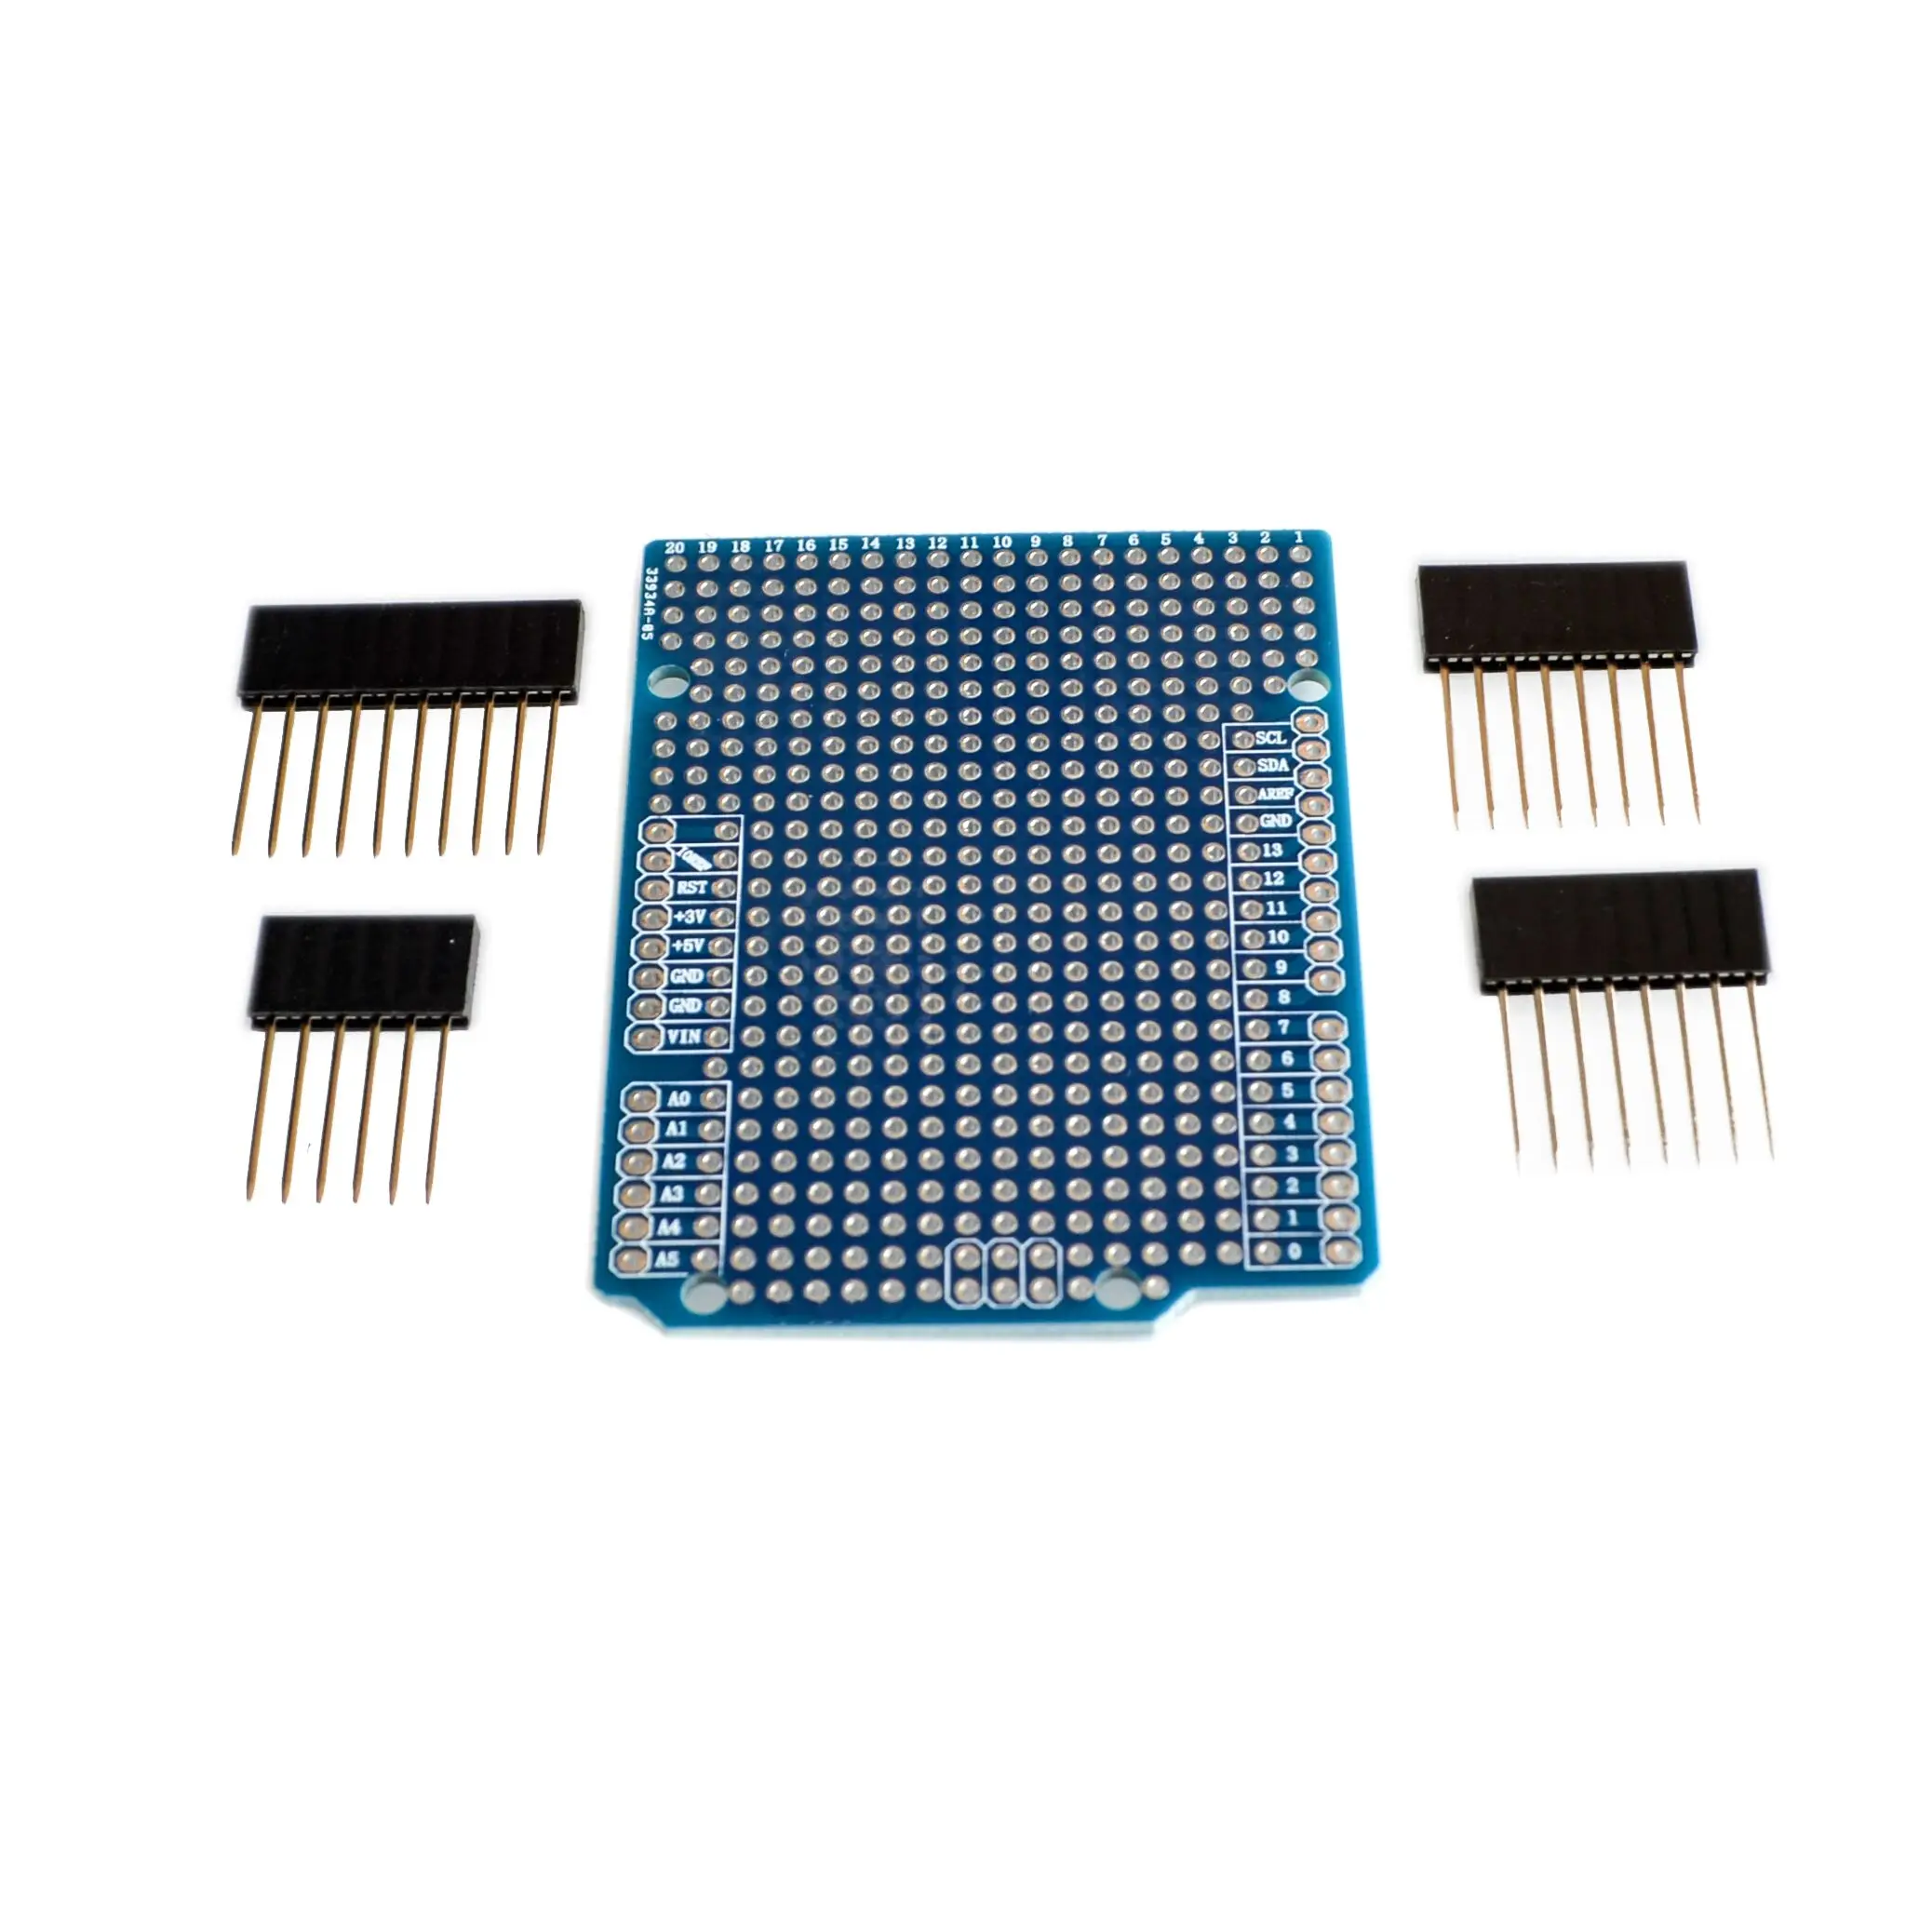 

10PCS/LOT Prototype PCB Expansion Board For Arduino UNO R3 ATMEGA328P Shield FR-4 Fiber PCB Breadboard 2mm 2.54mm Pitch